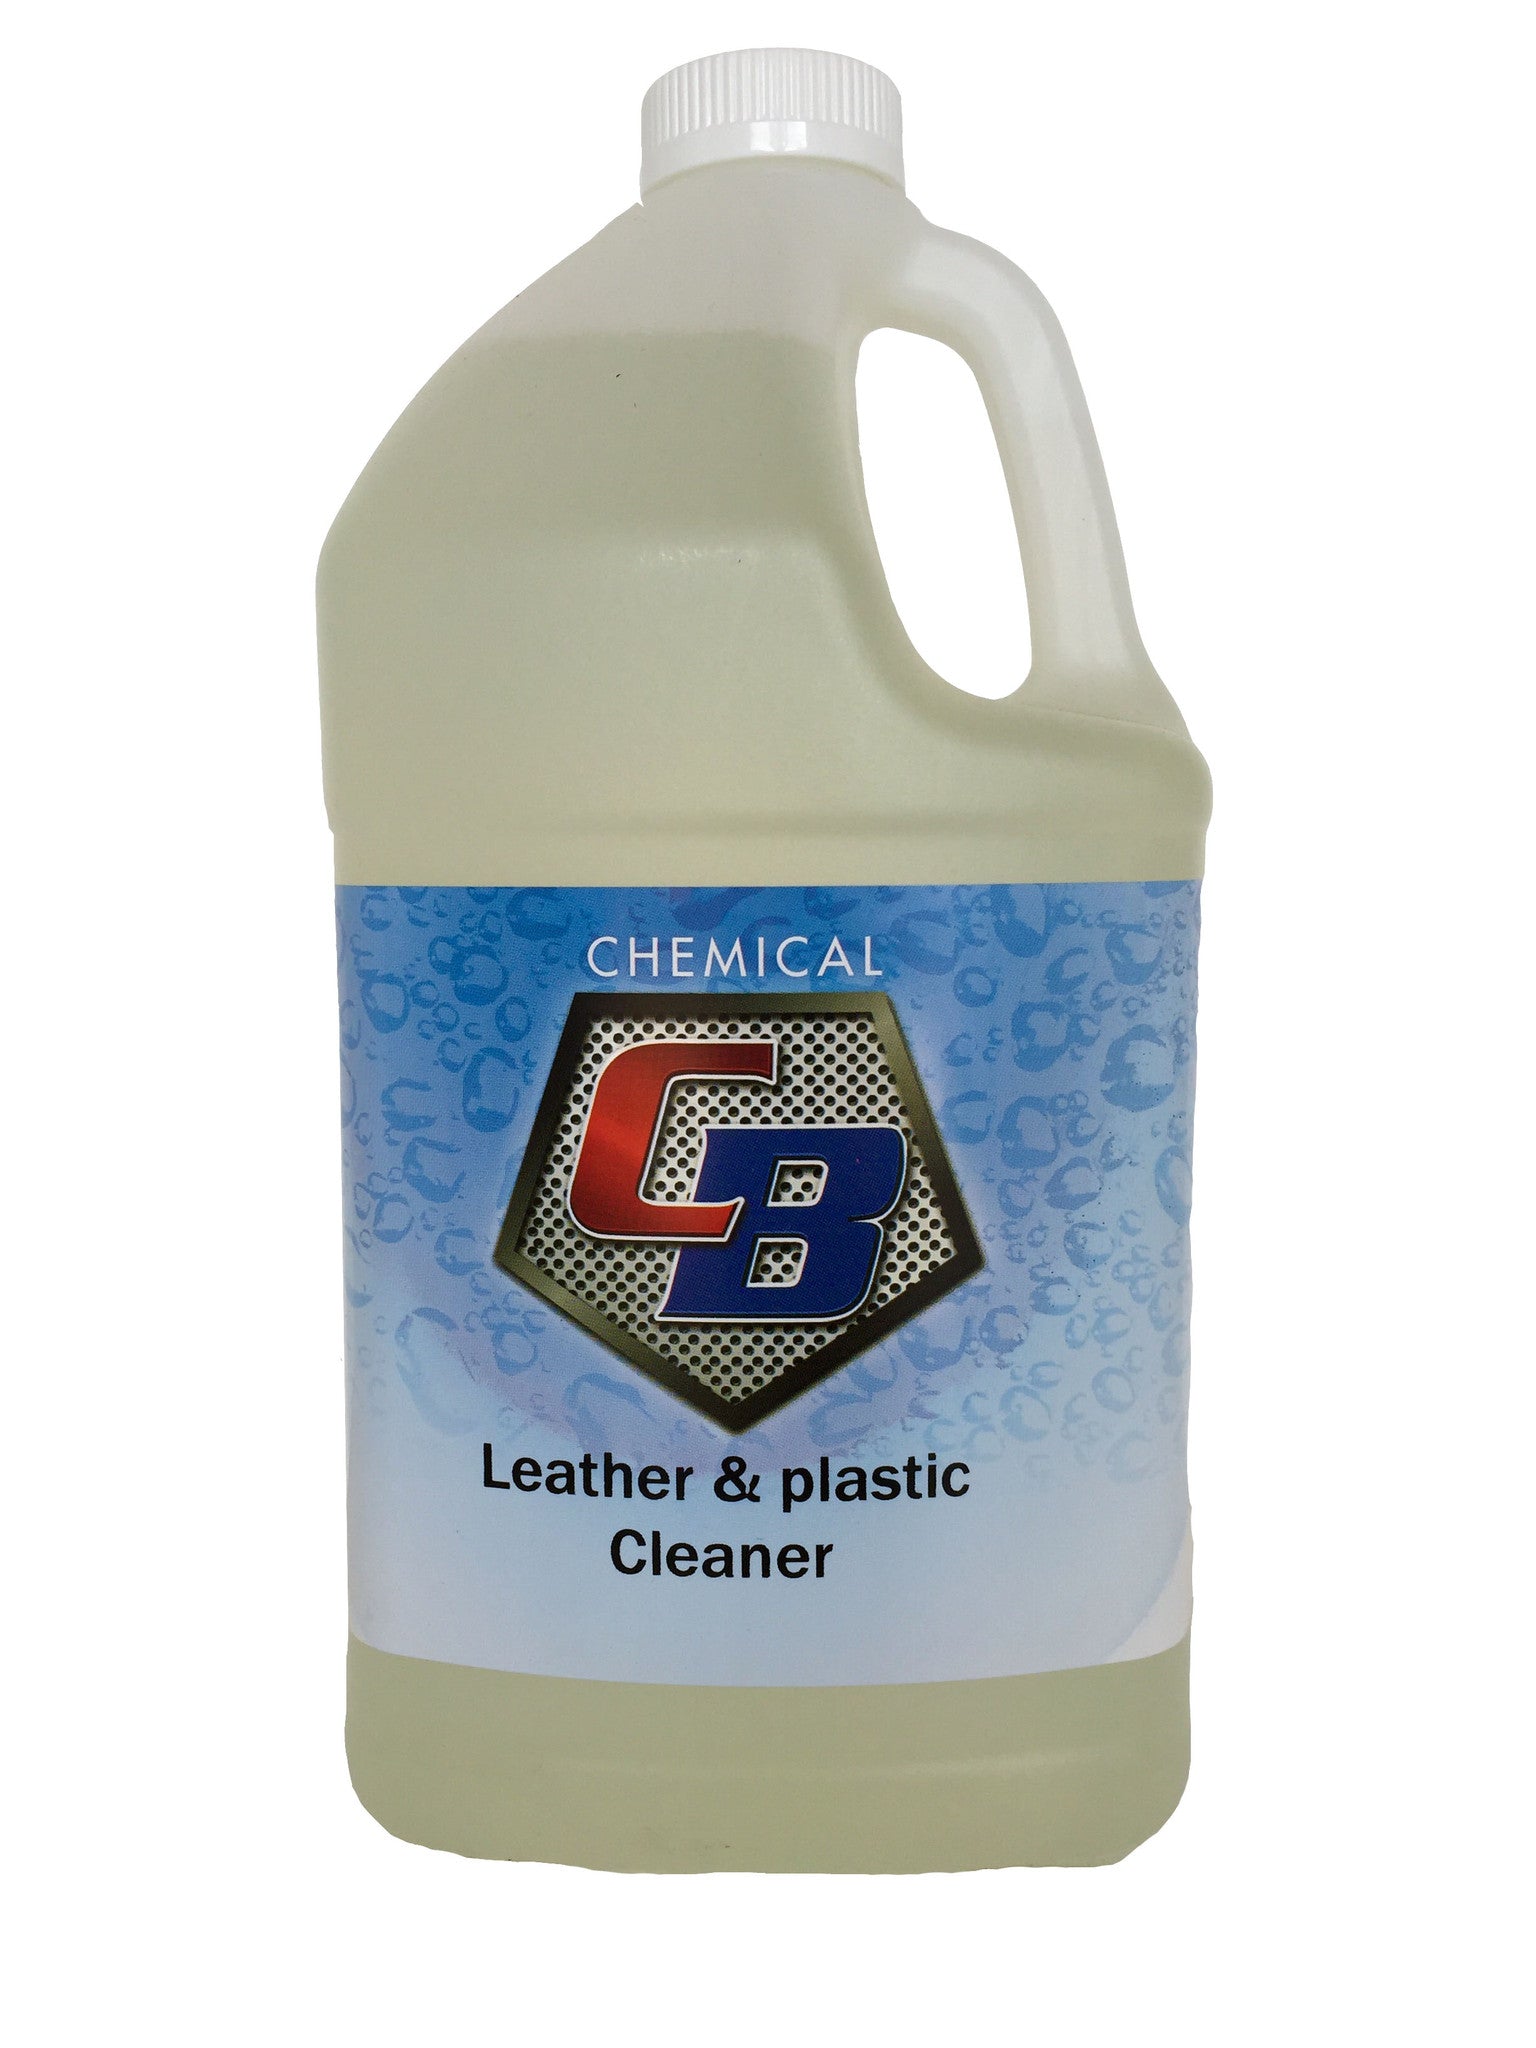 Leather & Plastic Cleaner - C & B Chemical, Inc